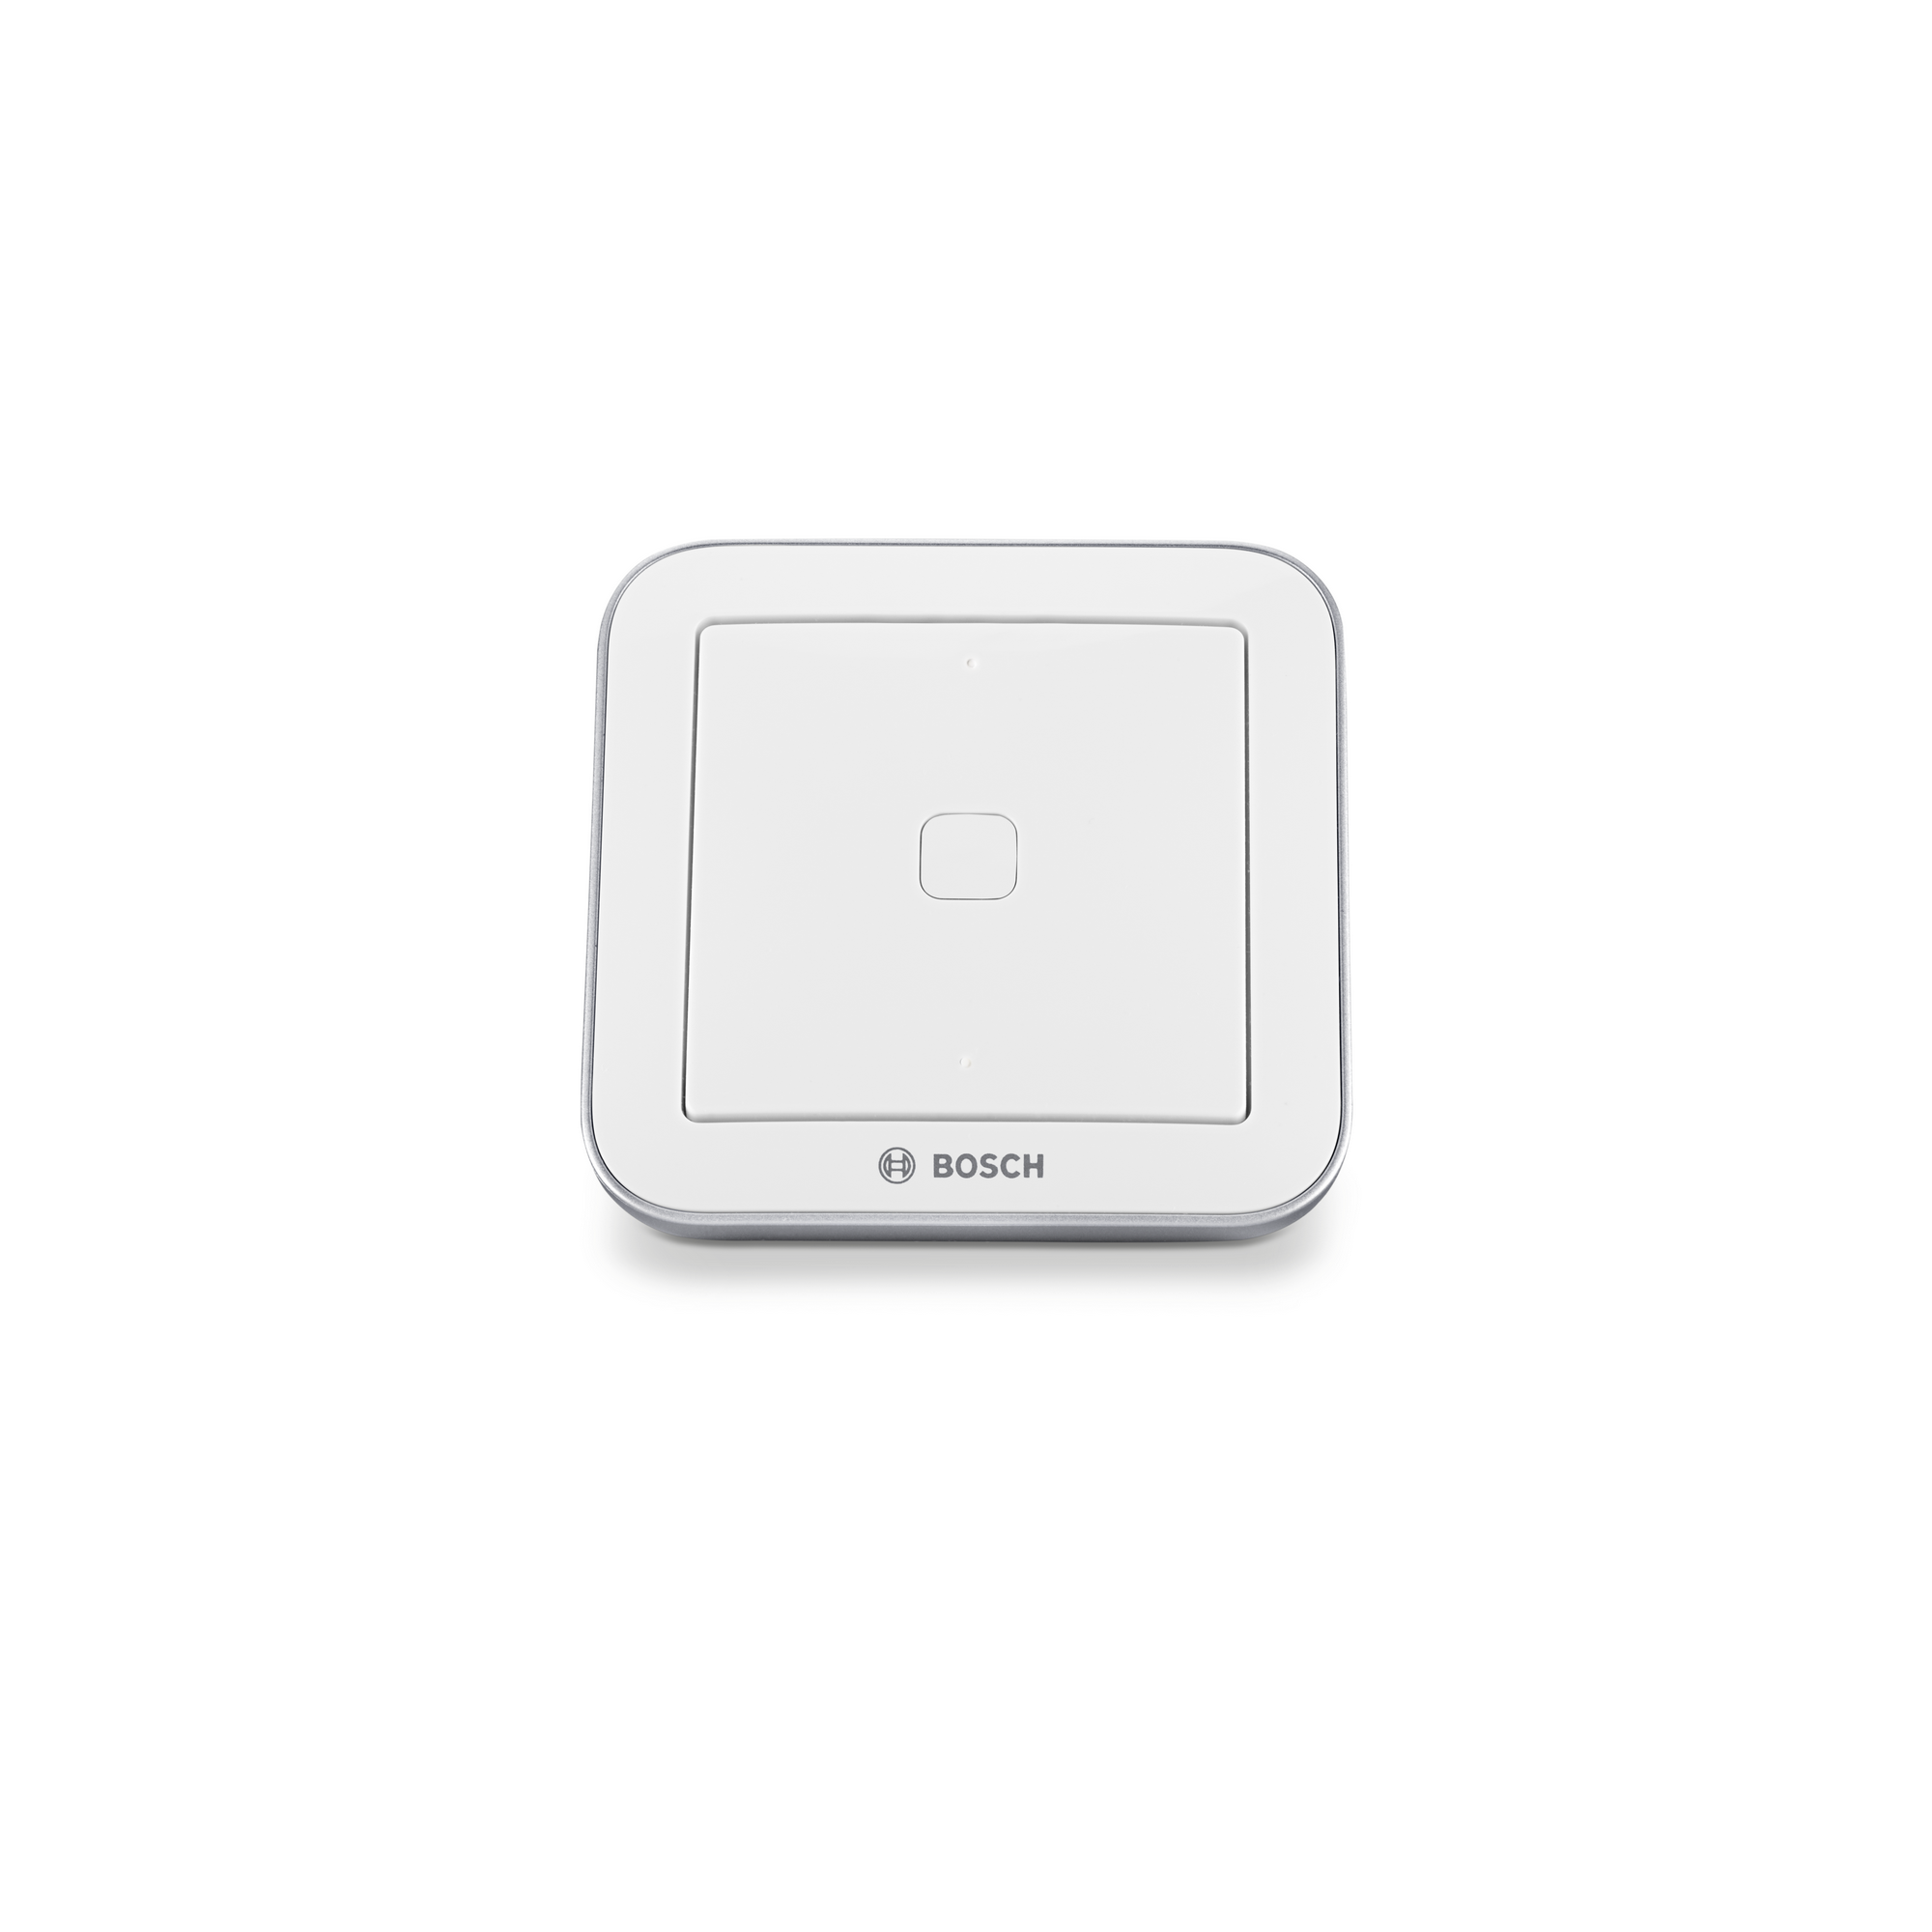 Bosch Smart Home Universalschalter 'Flex' 2